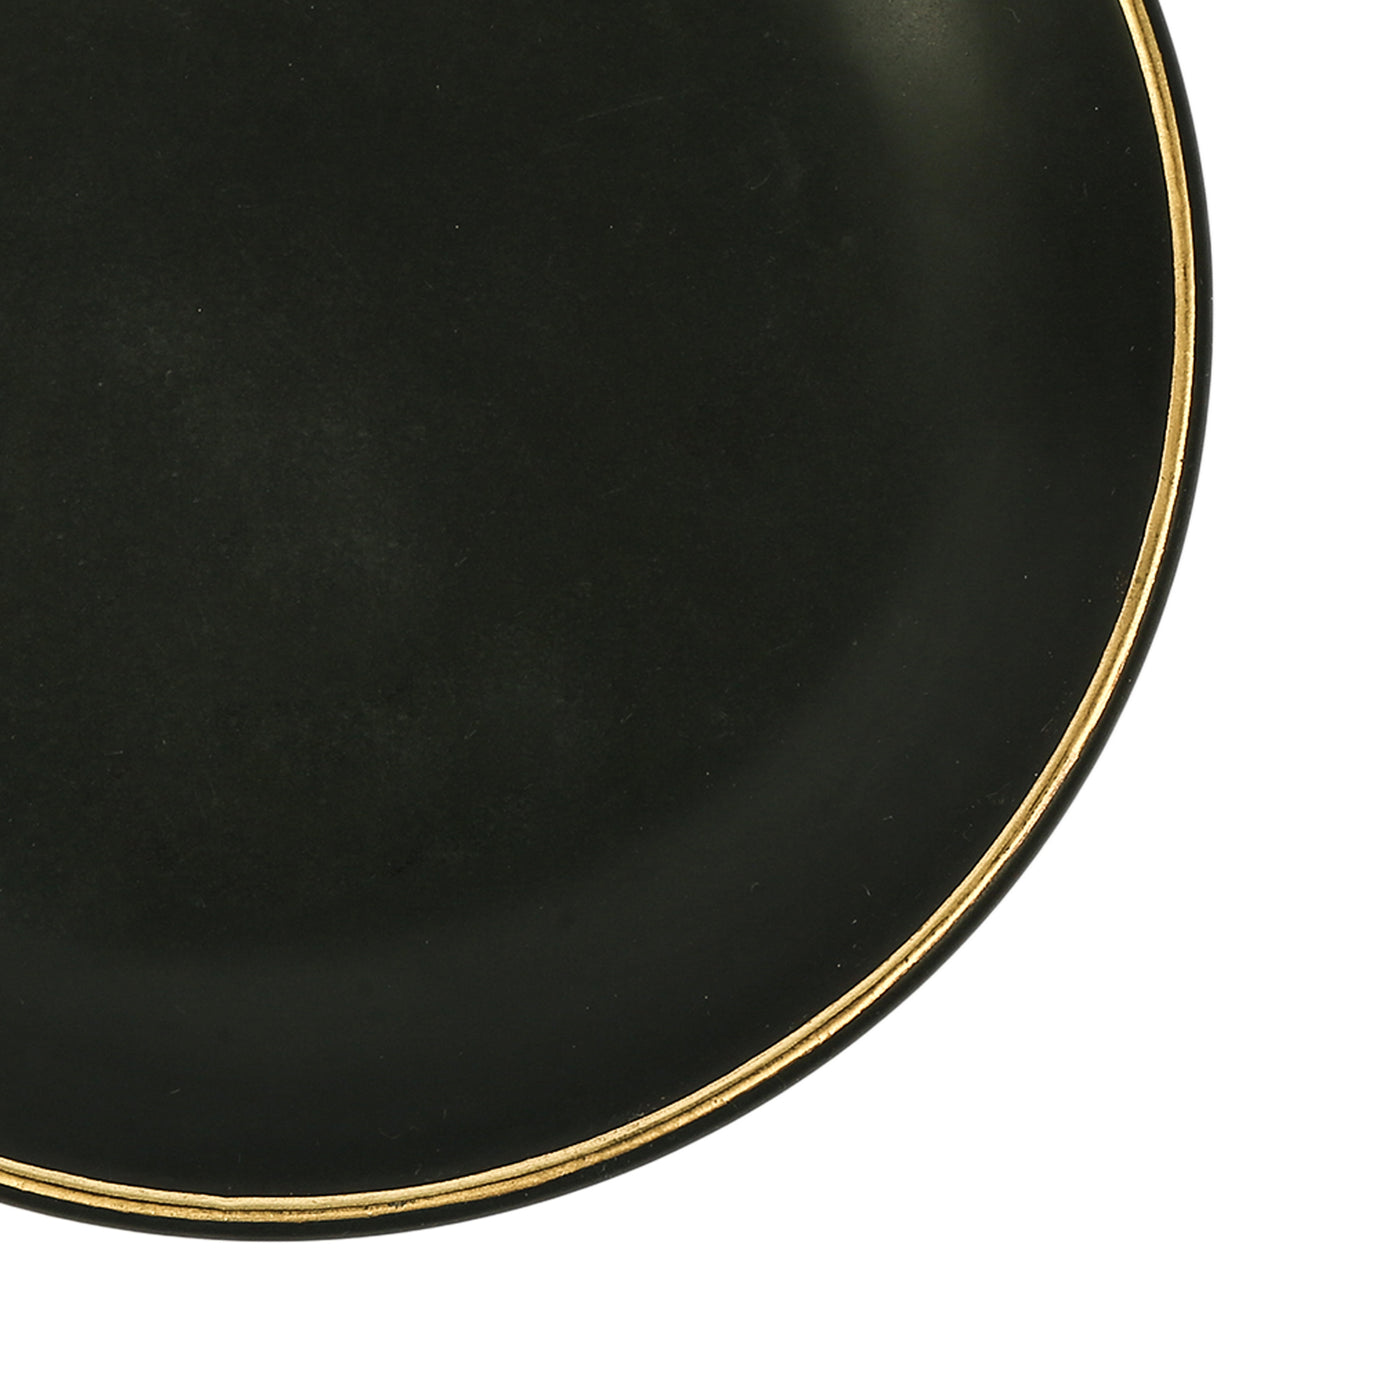 Halo 24K Gold Ceramic Shallow Plate